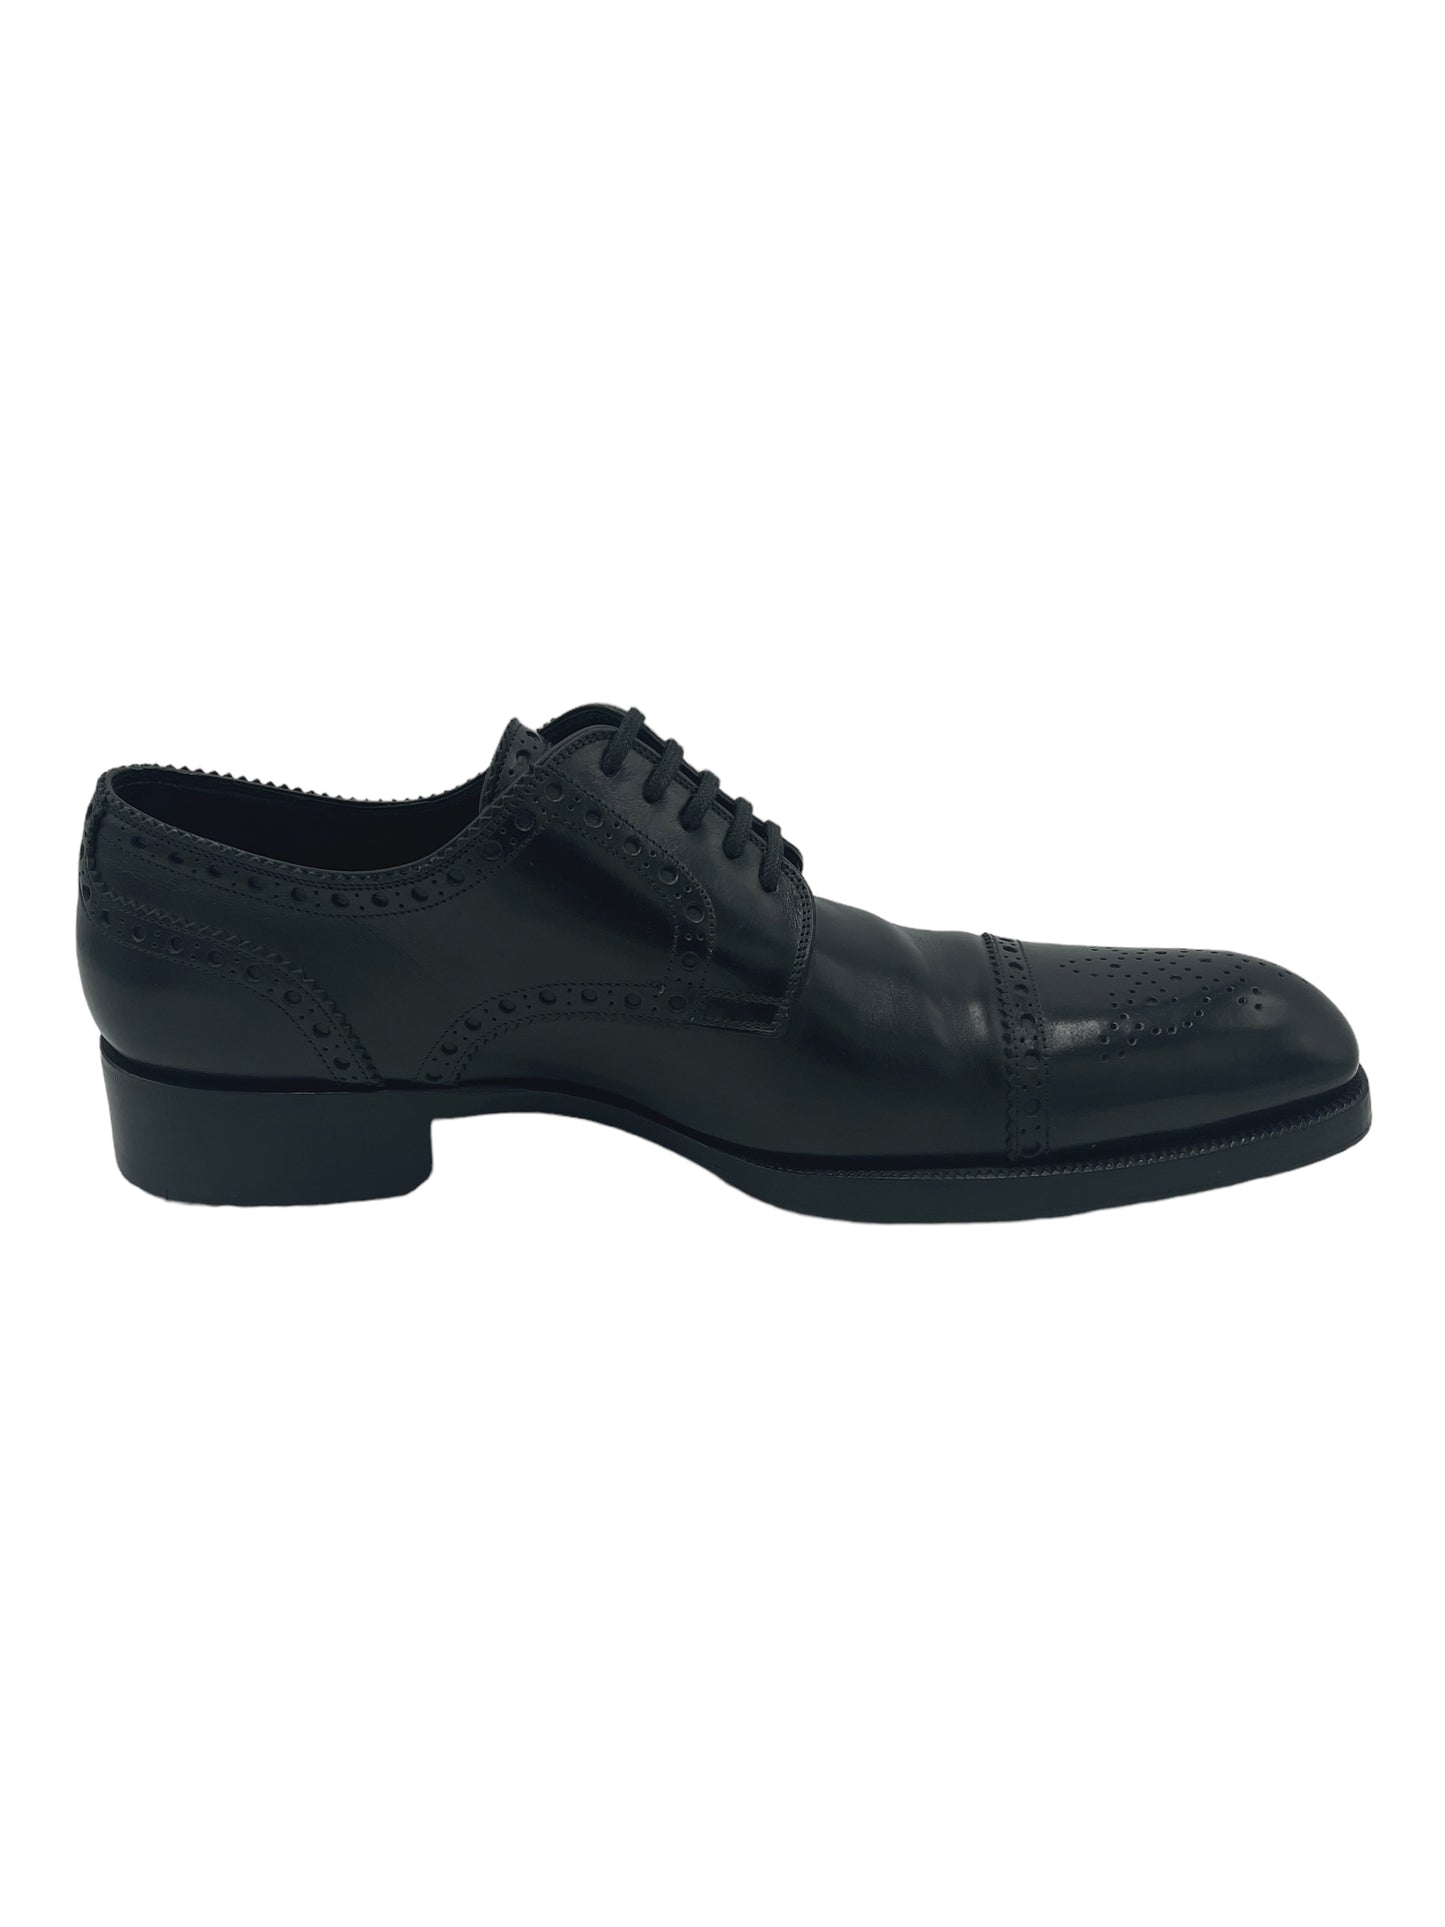 Tom Ford Black Brogue Cap Toe Derby Dress Shoes